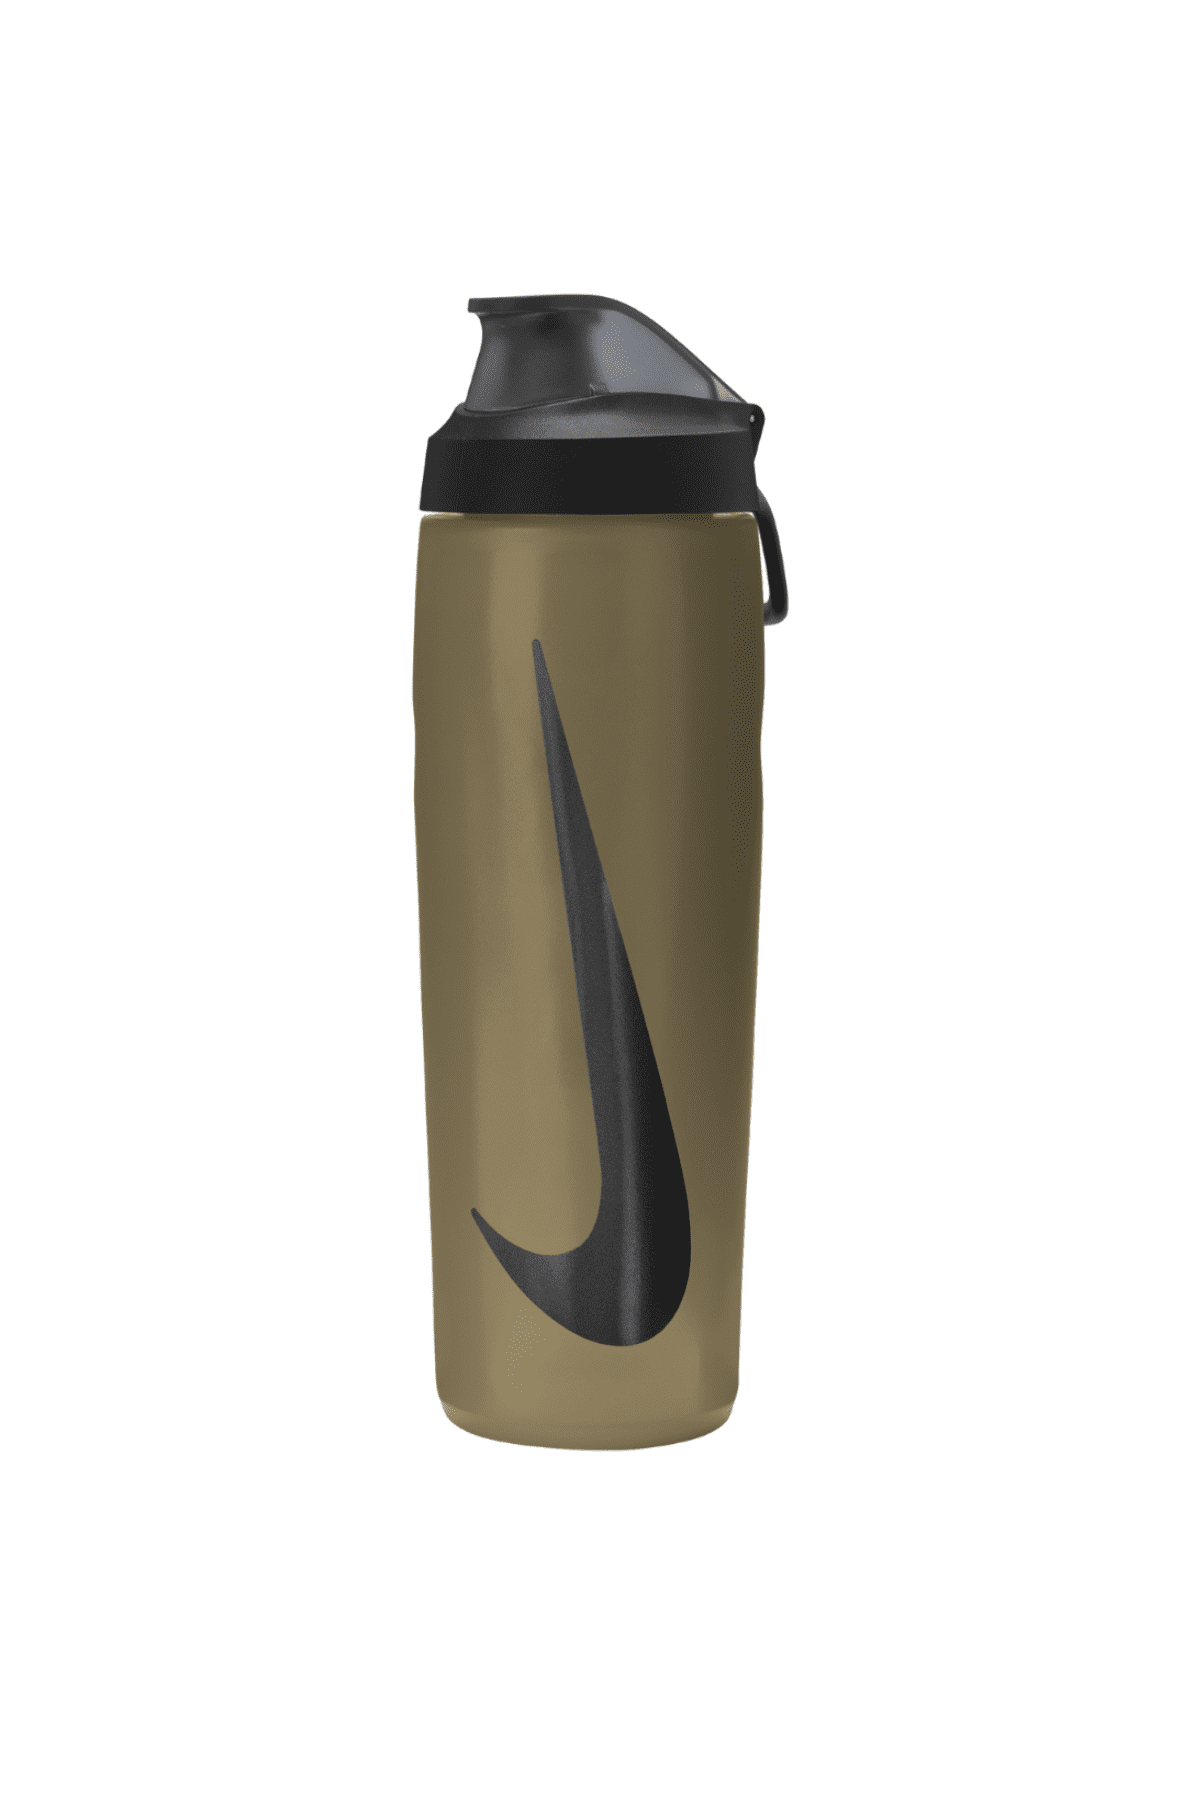 NIKE REFUEL בקבוק מים - בקבוק ספורט עם מכסה נייק 700 מ"ל זהב-Nike-One size-נאקו